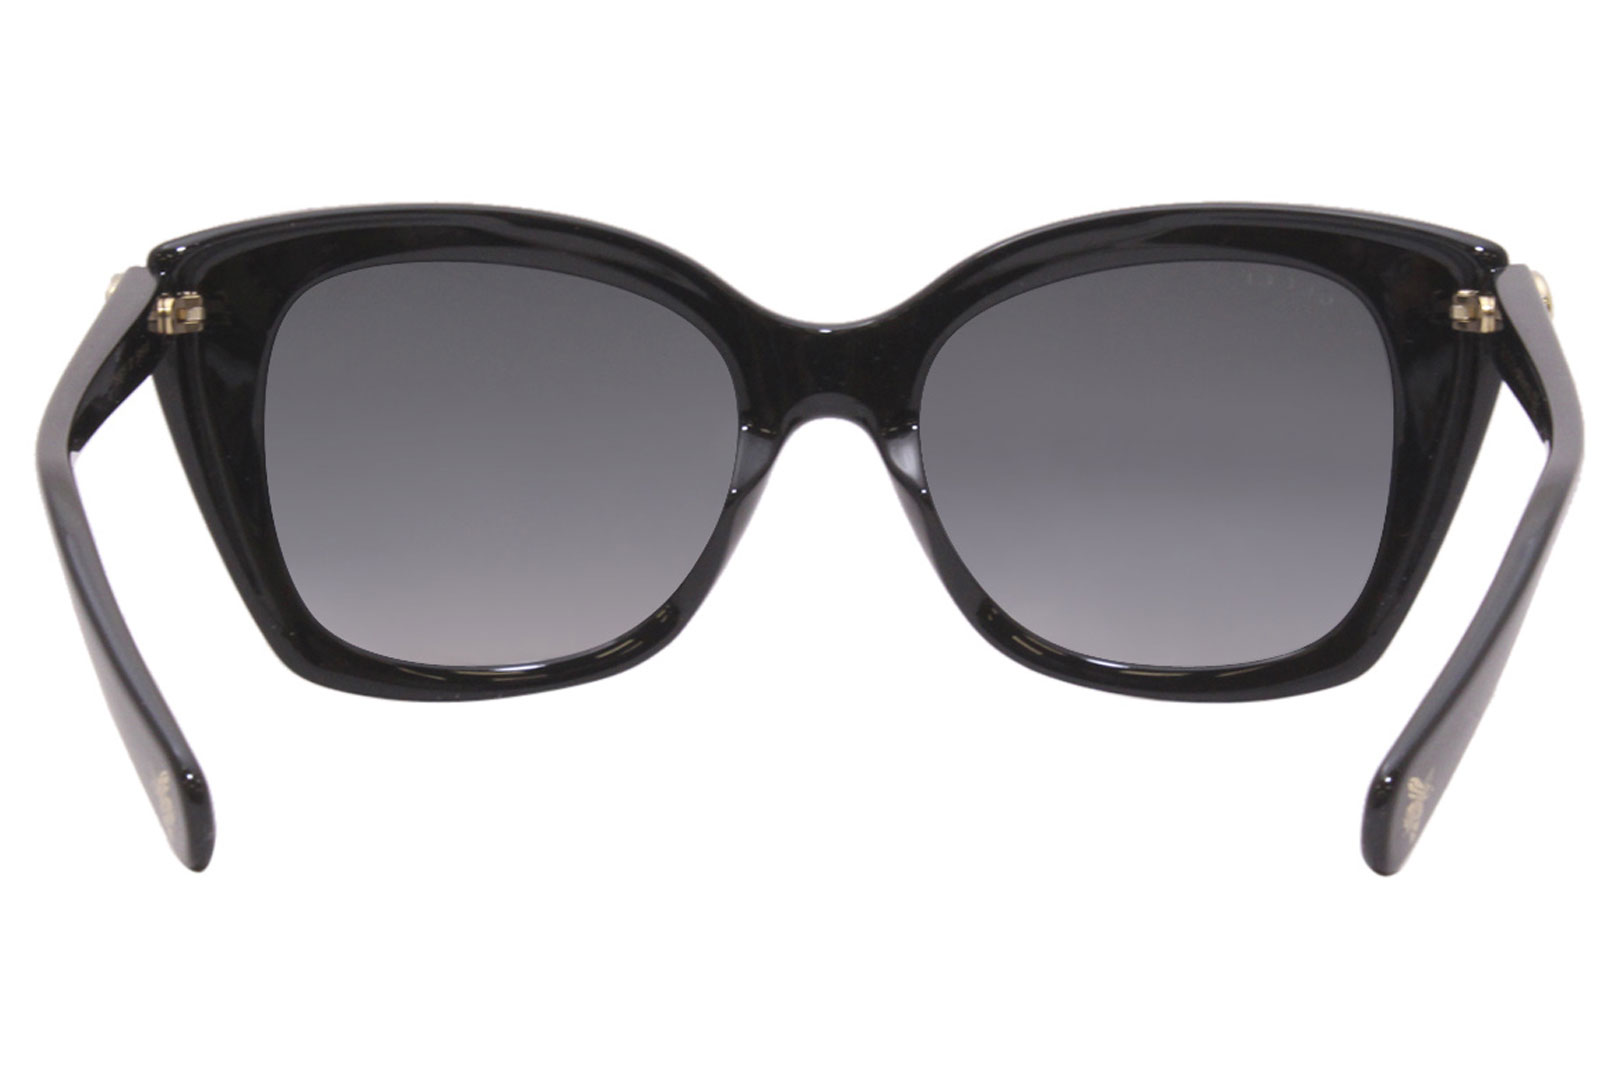 Gucci GG0921S Sunglasses Women's Fashion Rectangular | EyeSpecs.com